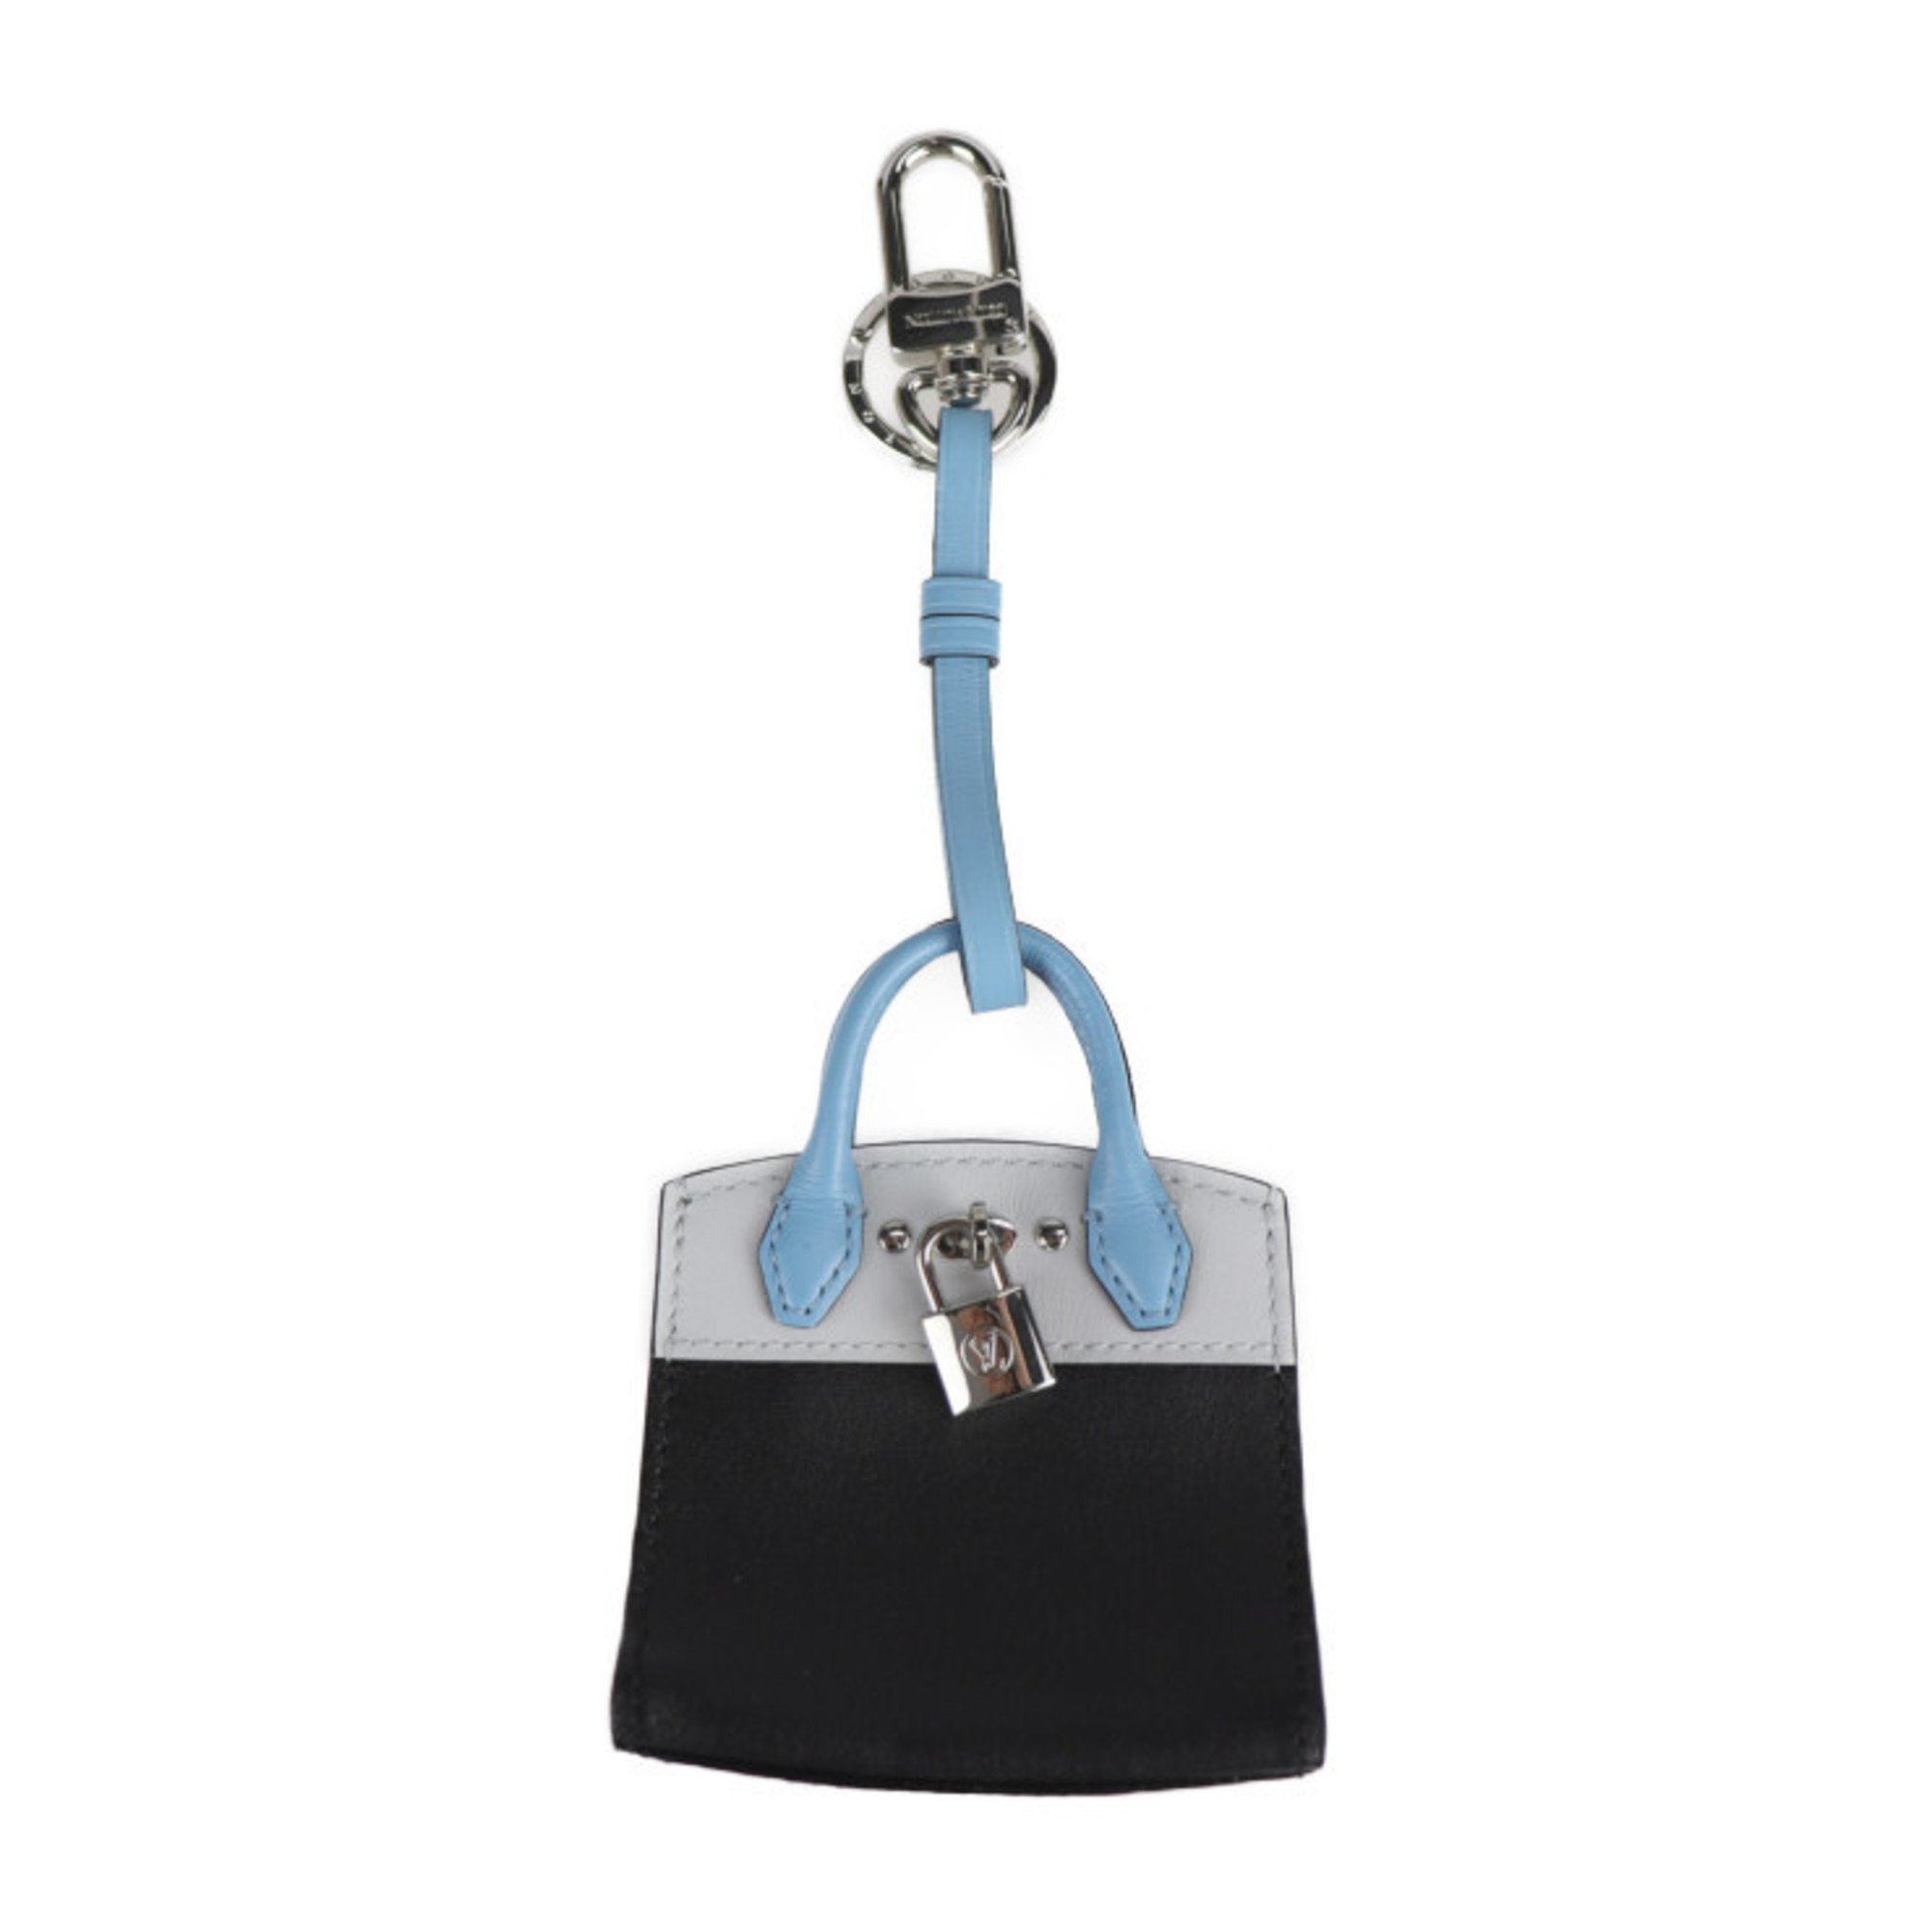 LOUIS VUITTON Louis Vuitton City Steamer Keychain MP1786 Leather Black Light Blue Bag Charm Key Ring